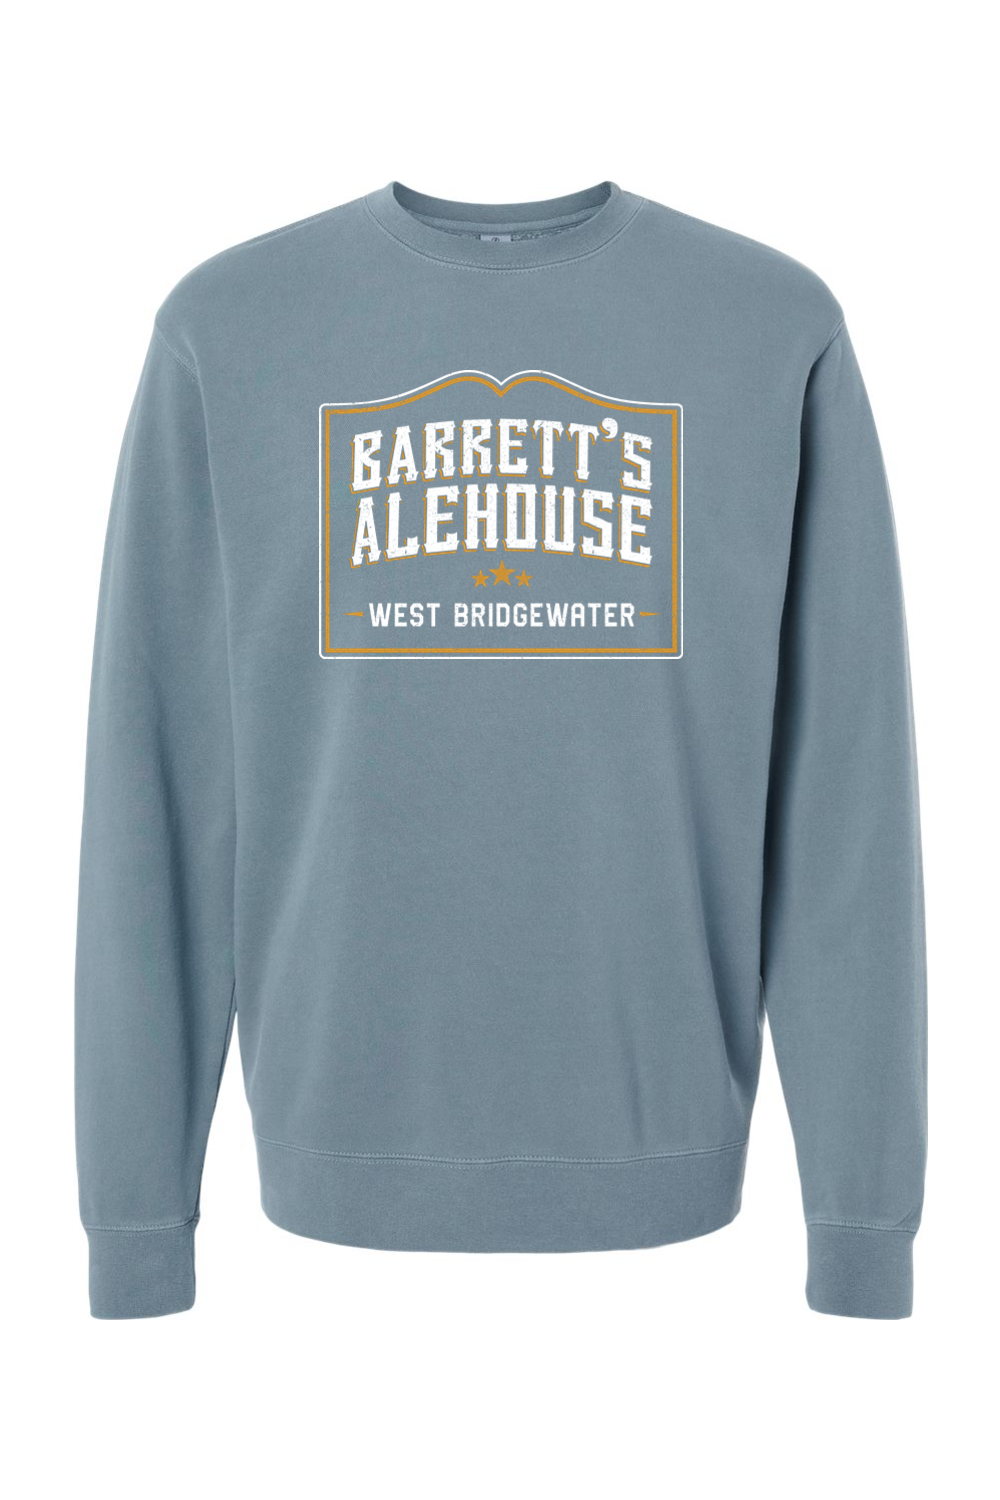 Barrett's Alehouse West Bridgewater Pigment-Dyed Crewneck Sweatshirt